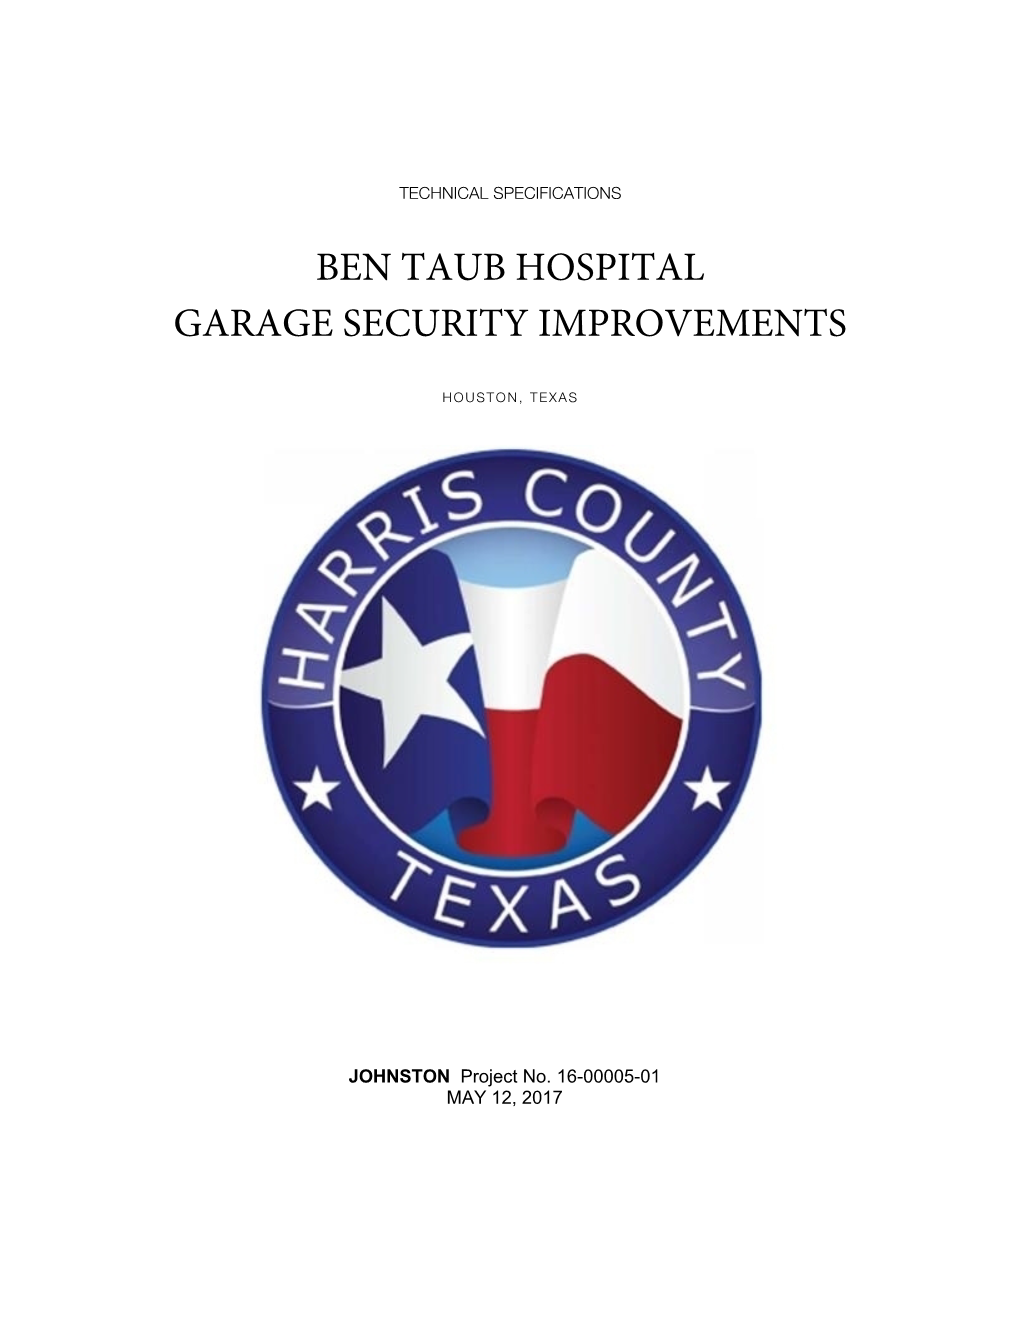 Ben Taub Hospital Garage Security Improvements